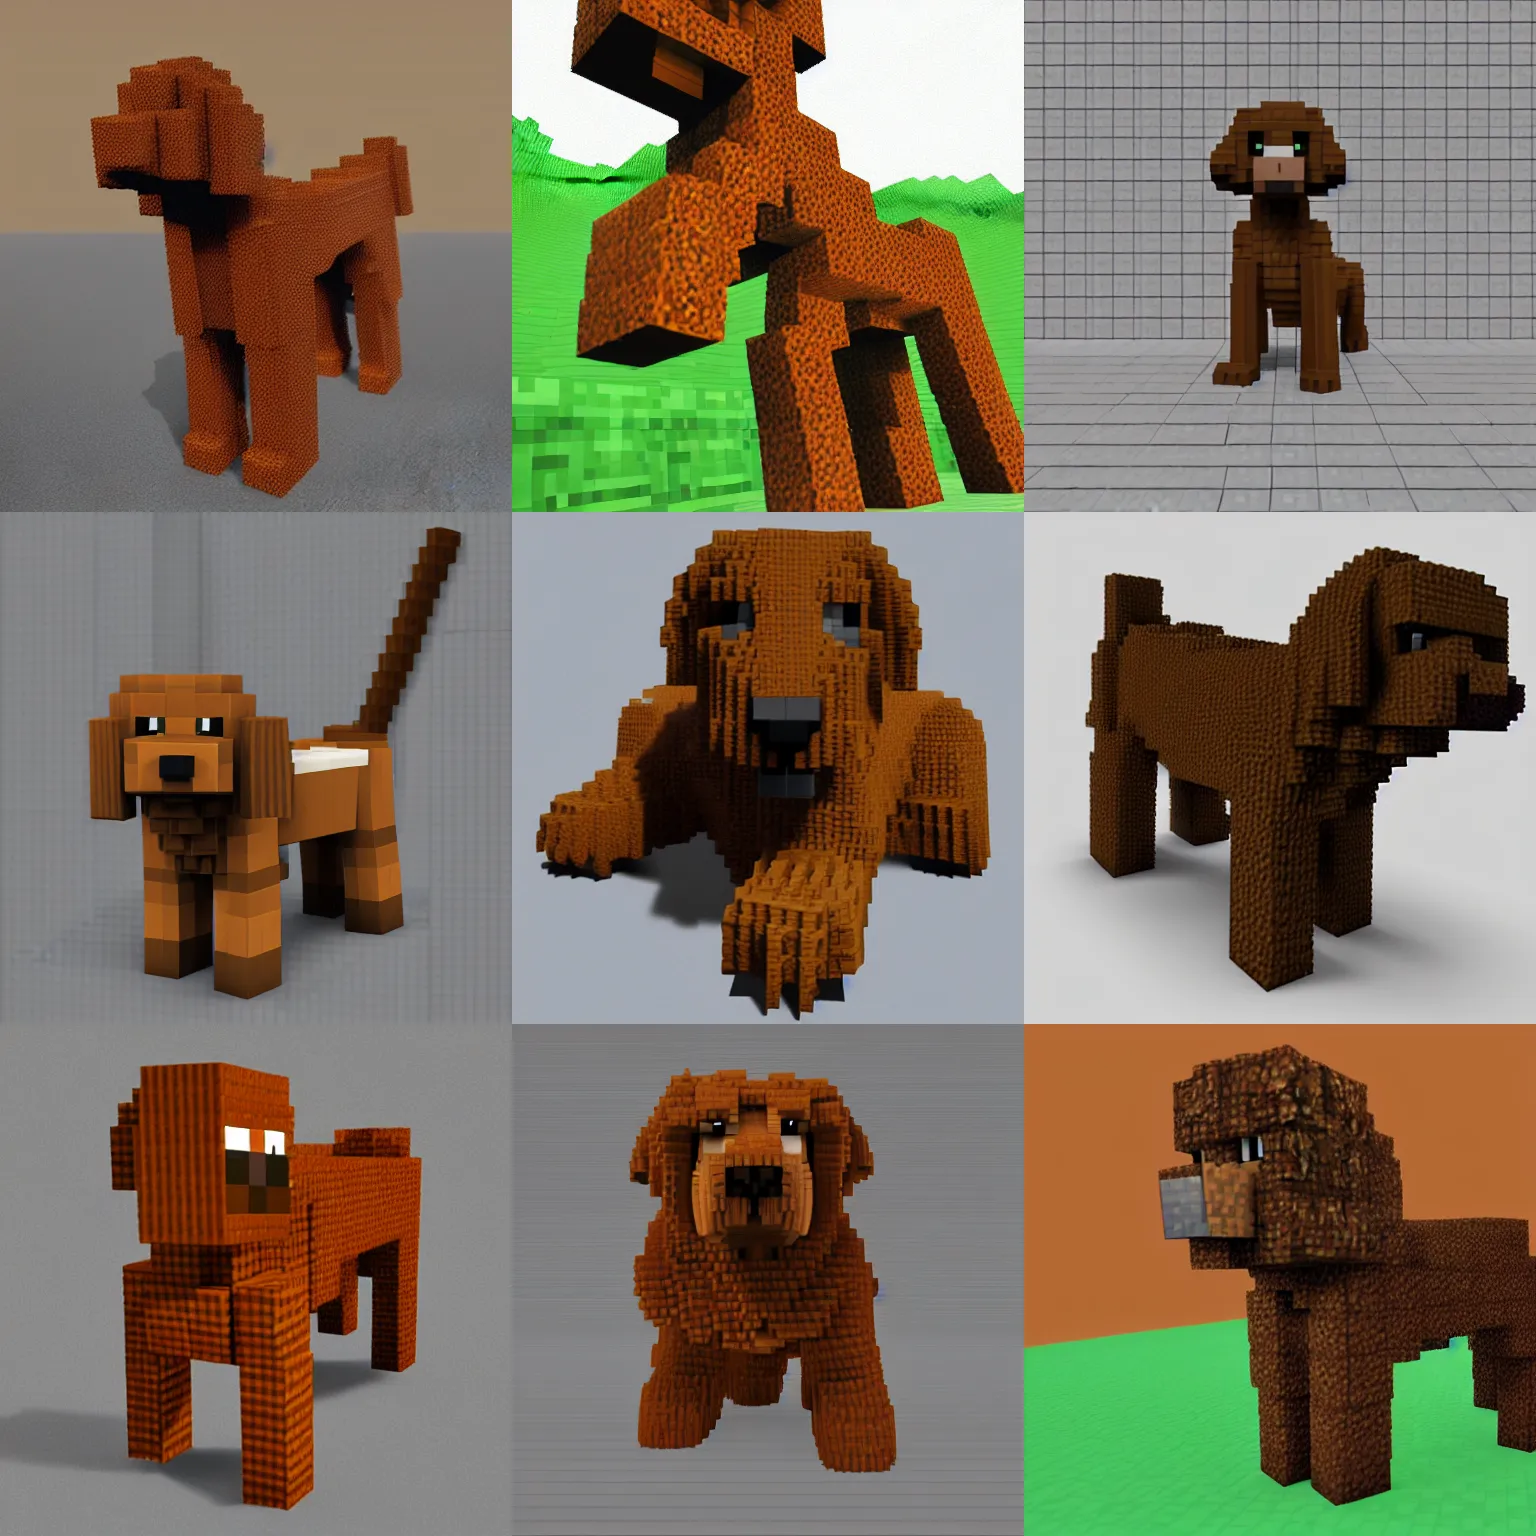 Prompt: minecraft voxel render of a brown labradoodle